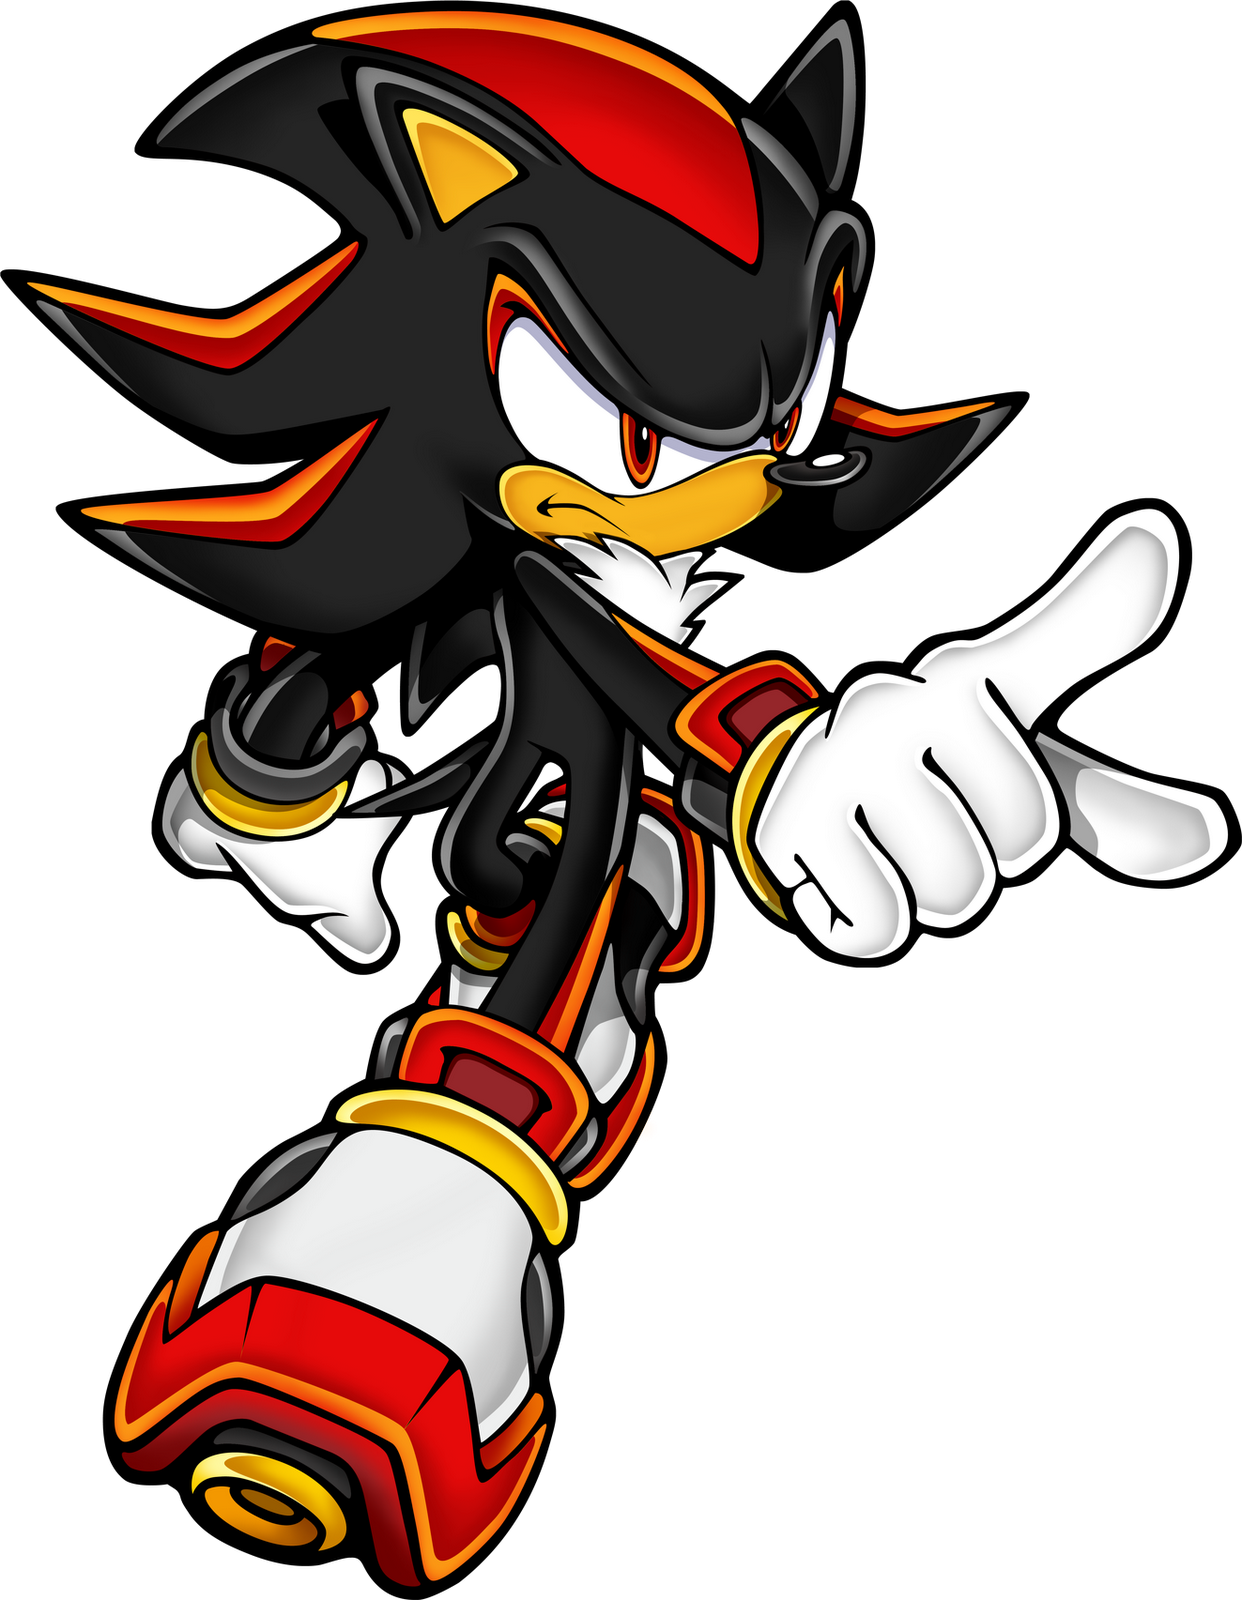 Sonic The Hedgehog PNG Transparent Image